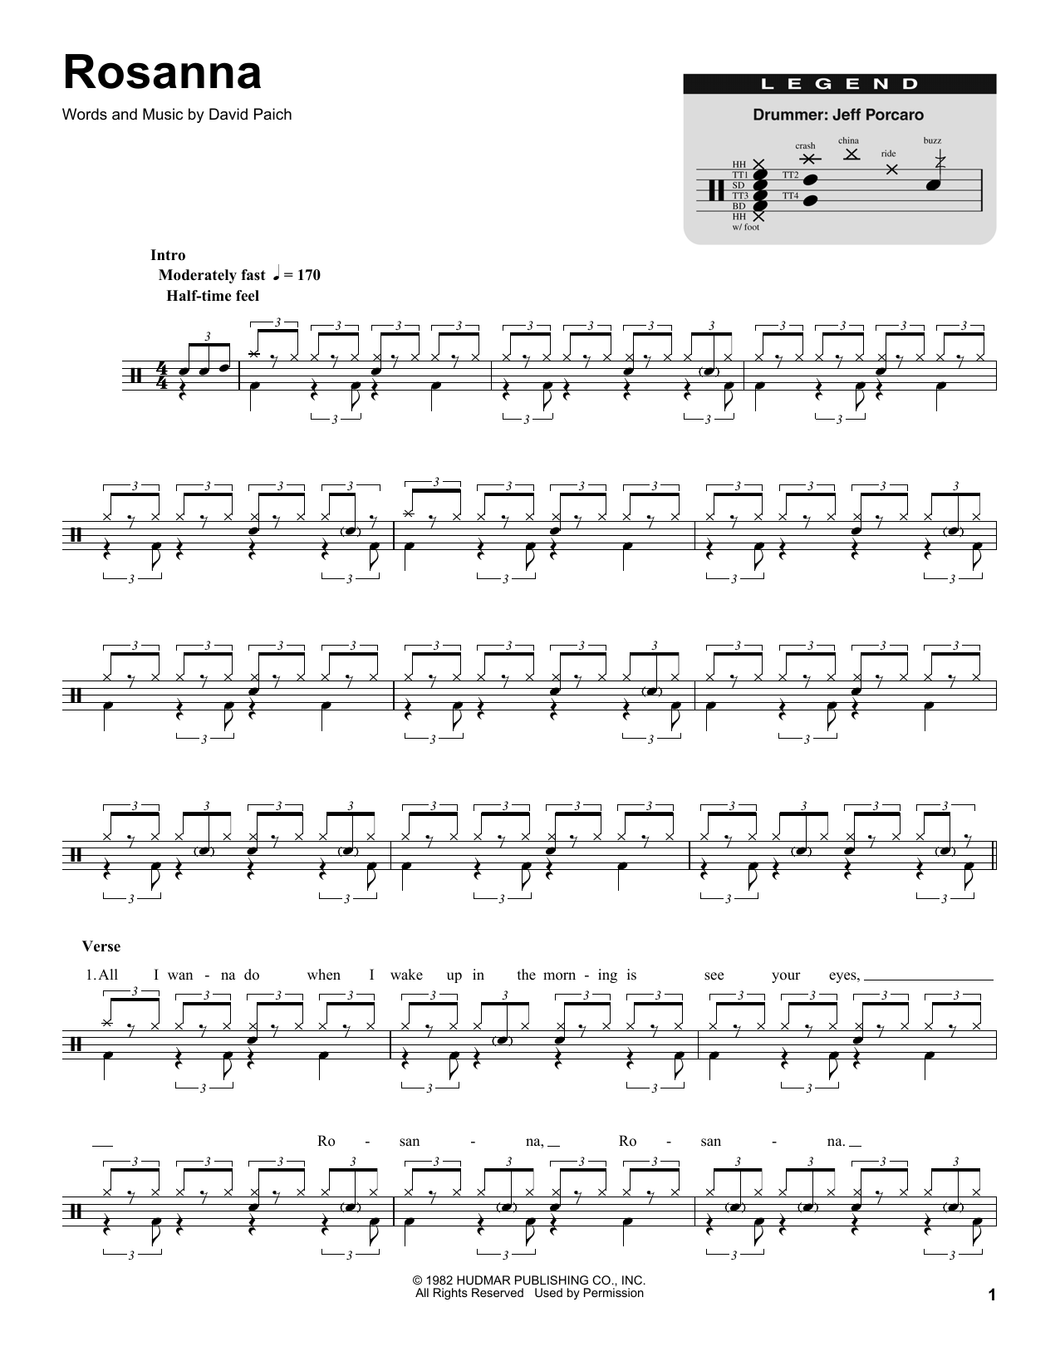 Rosanna - Toto - Full Drum Transcription / Drum Sheet Music - SheetMusicDirect DT174472